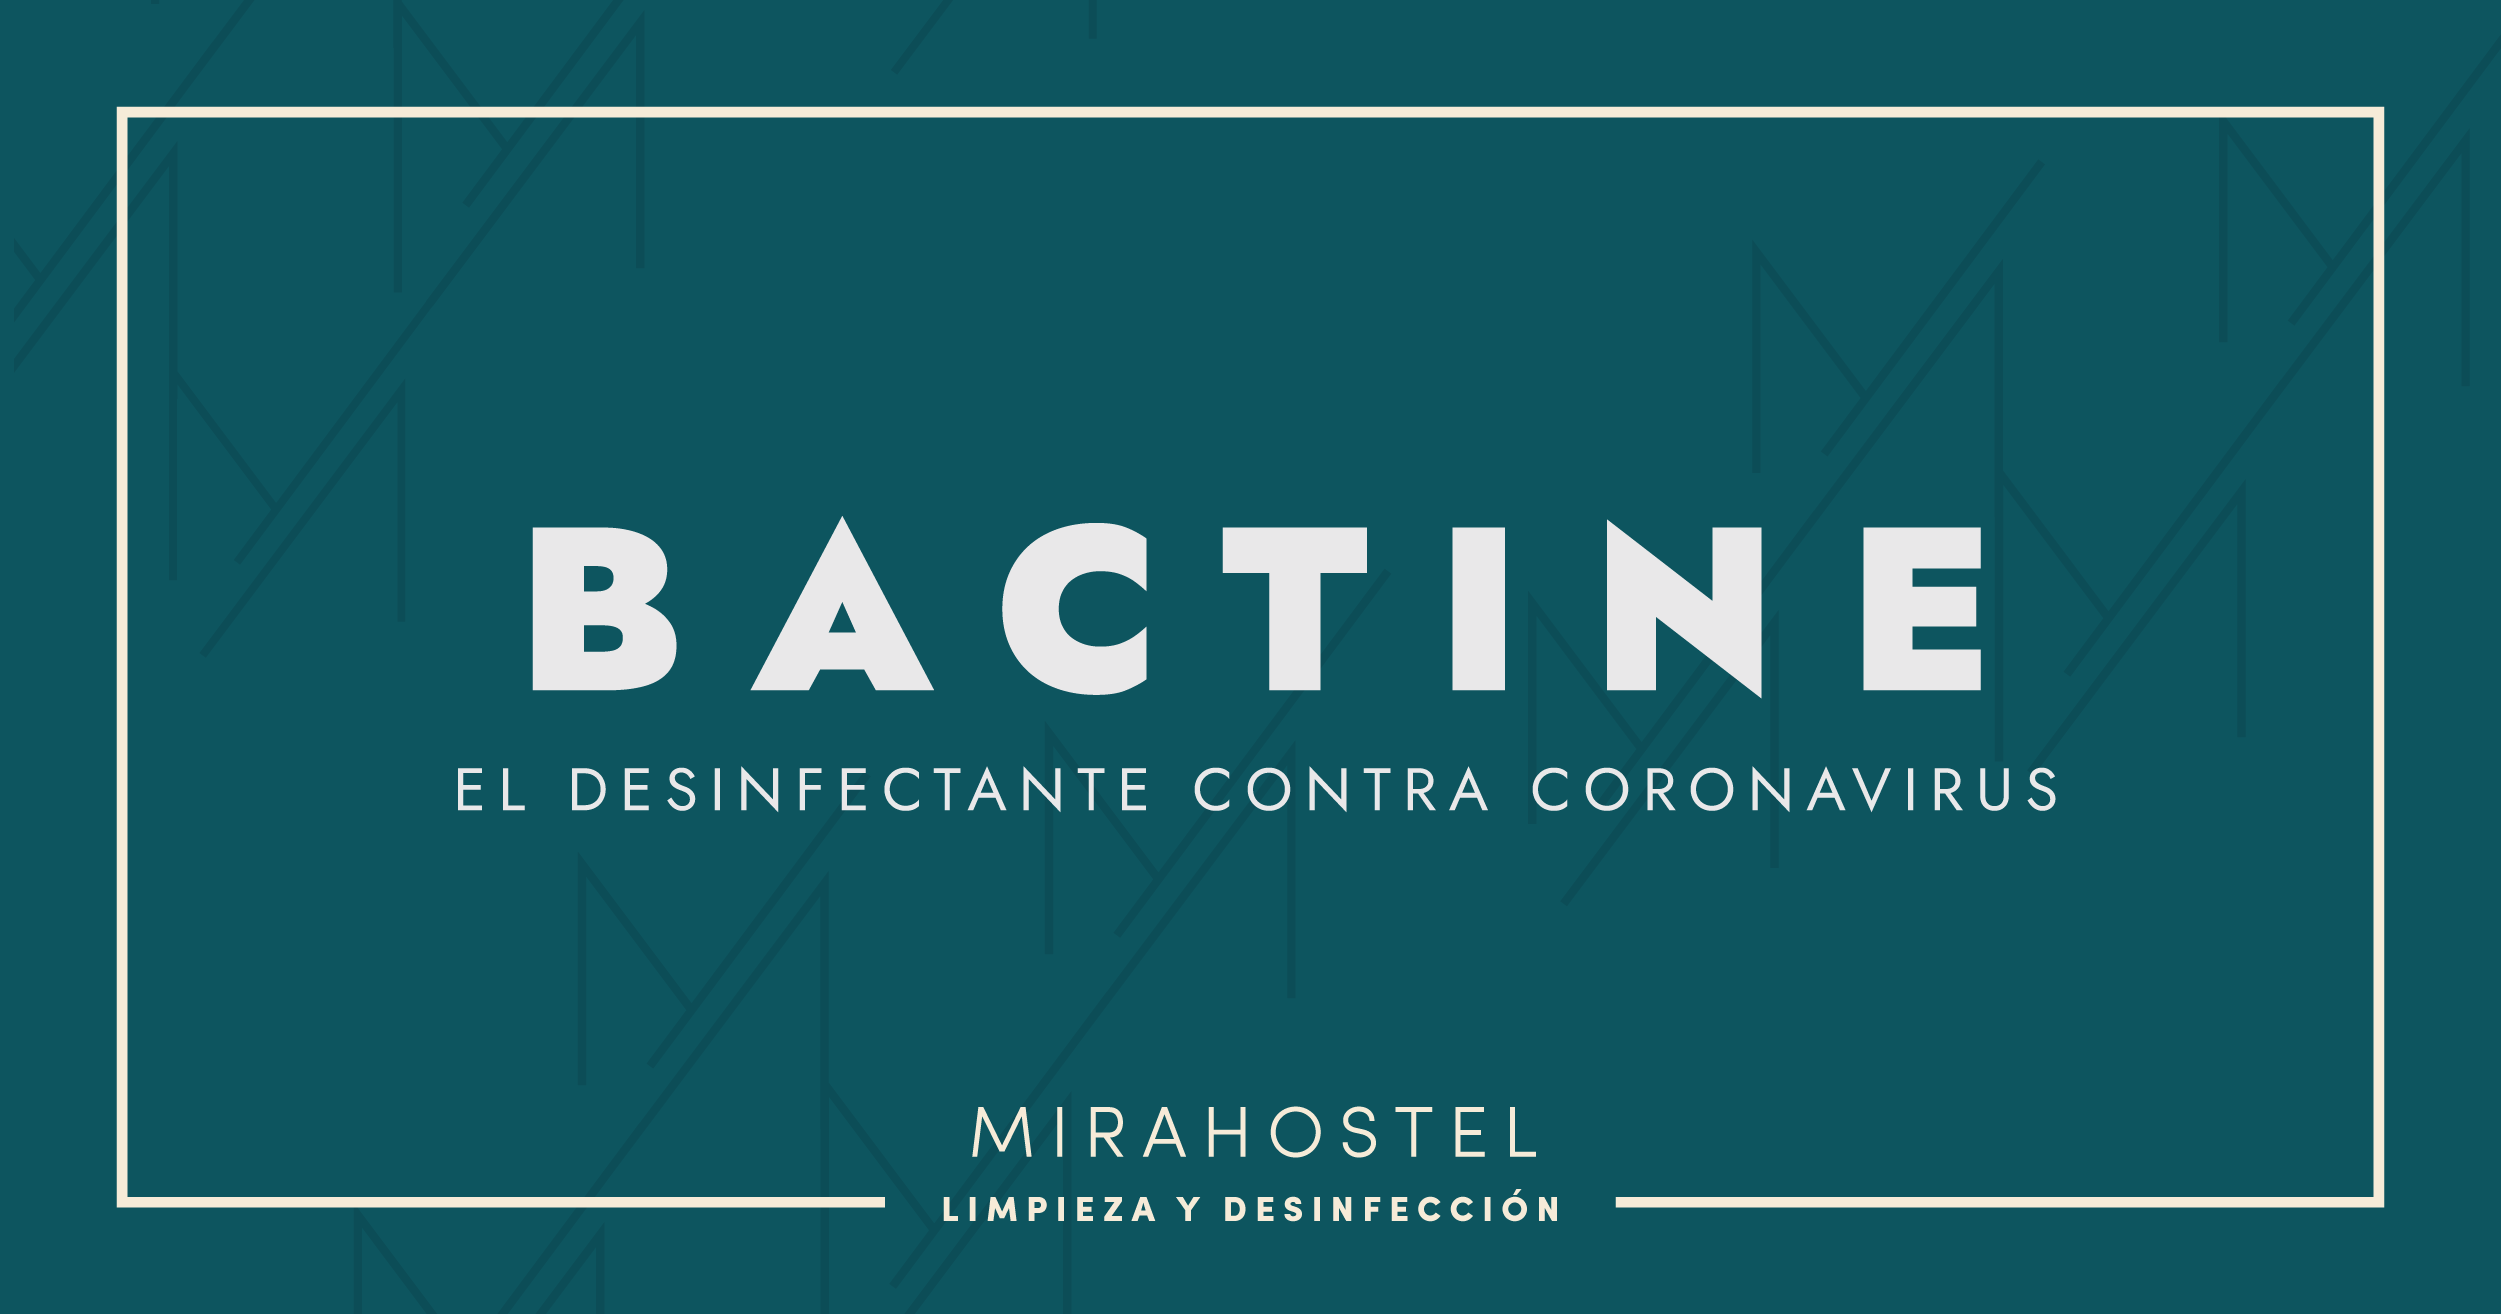 Bactine, el desinfectante contra coronavirus